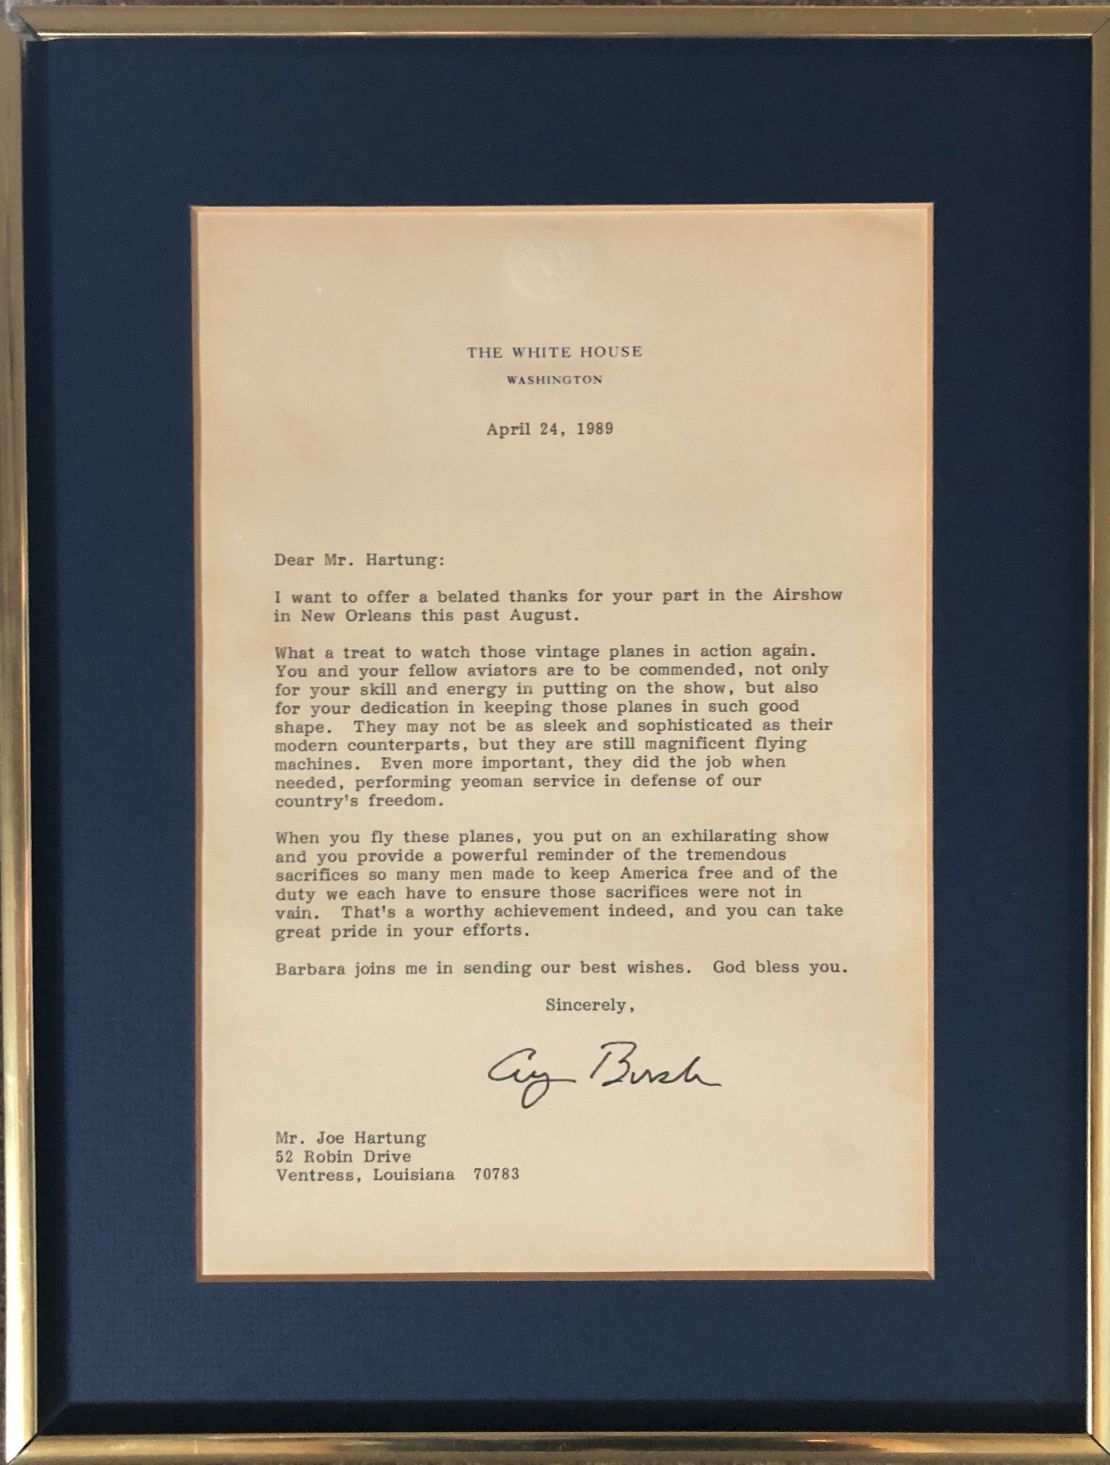 Former President George H.W. Bush sent the letter in April, 1989.